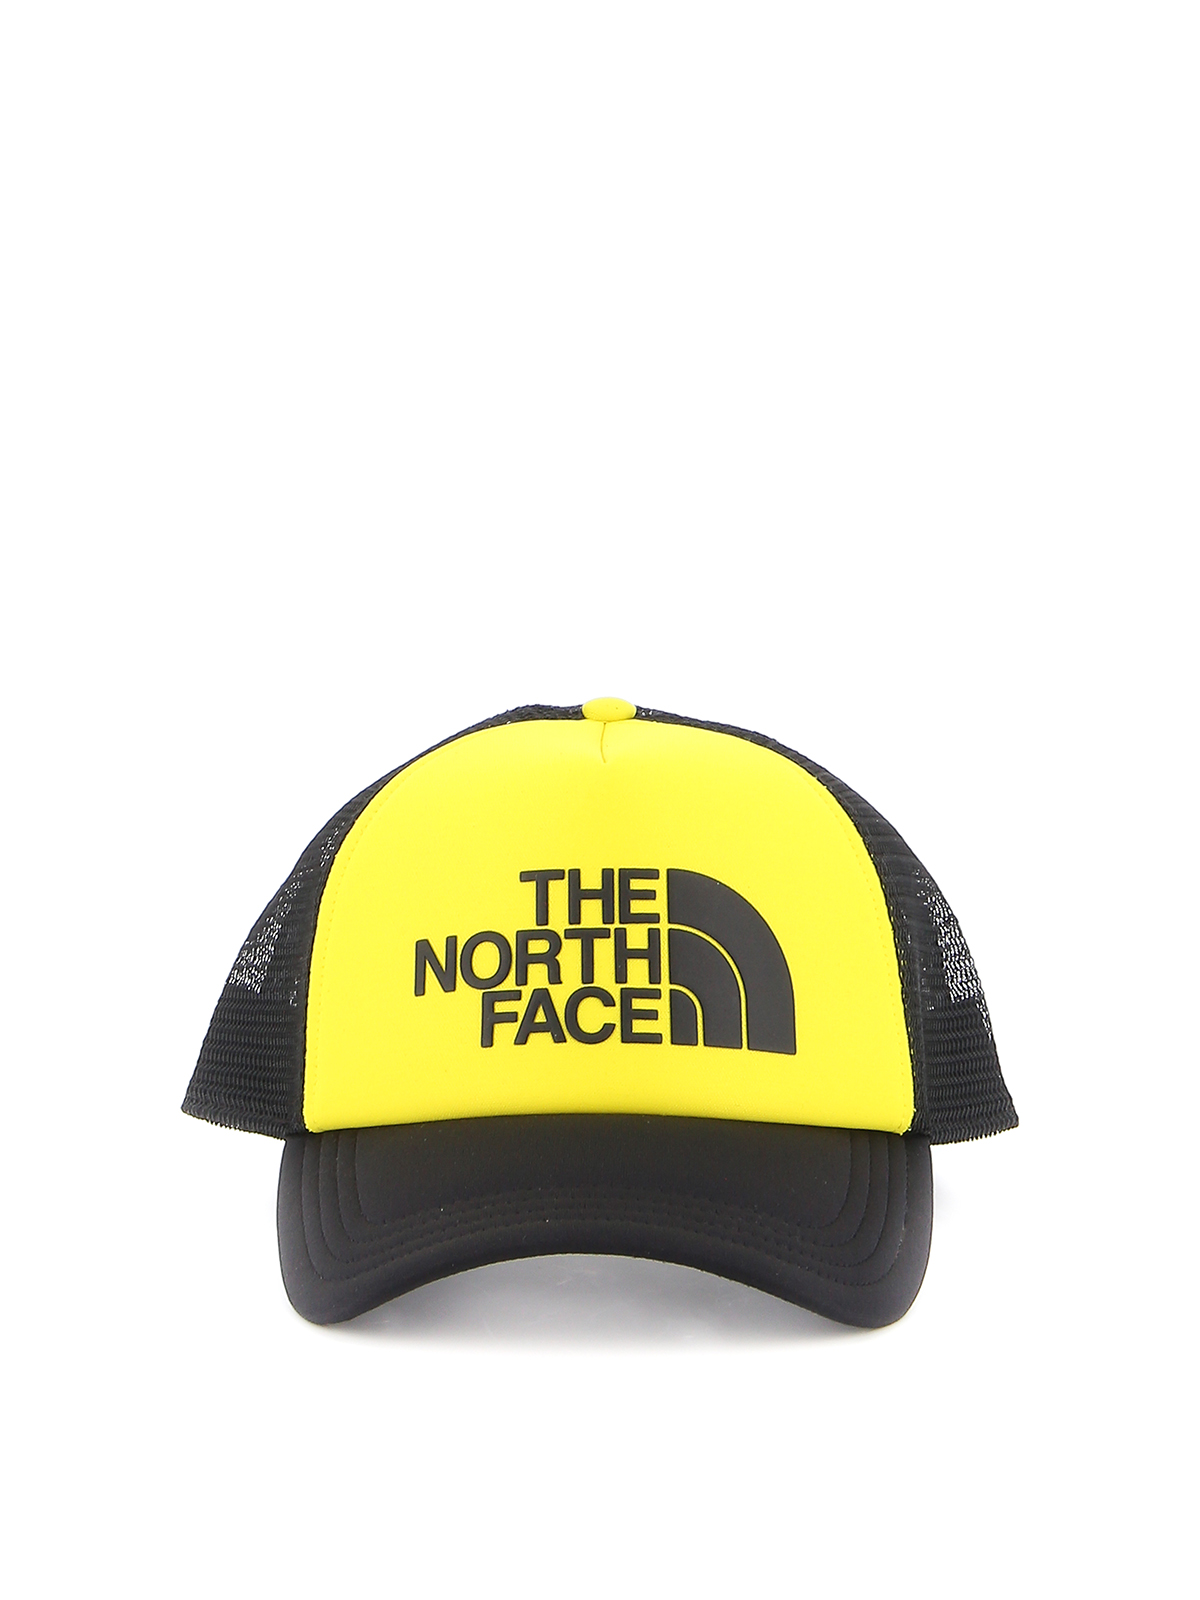 THE NORTH FACE LOGO TRUCKER FABRIC AND MESH BASEBALL CAP